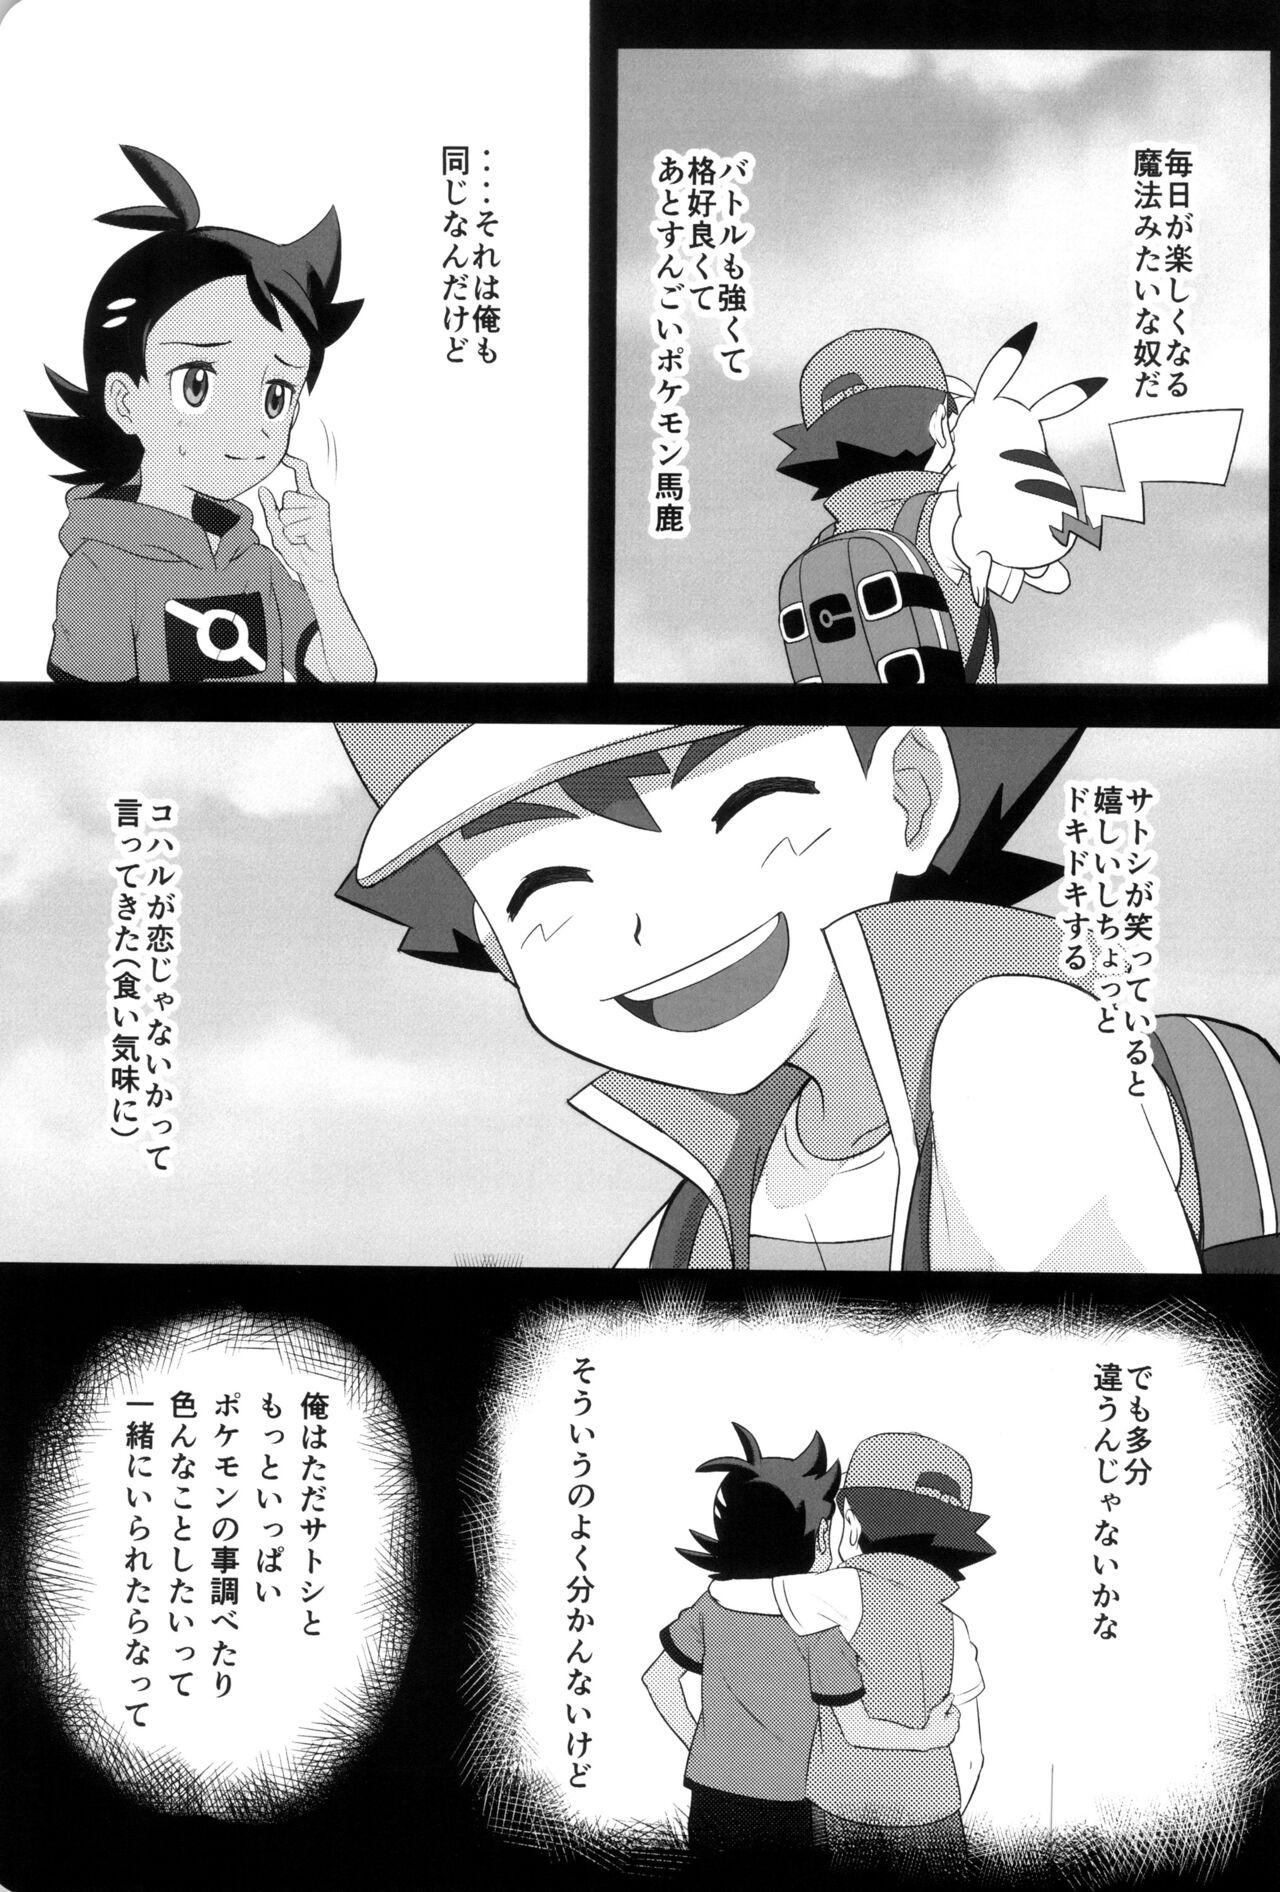 Yanks Featured Daijoubu! ! Ryou omoida yo - Pokemon | pocket monsters Full Movie - Page 5